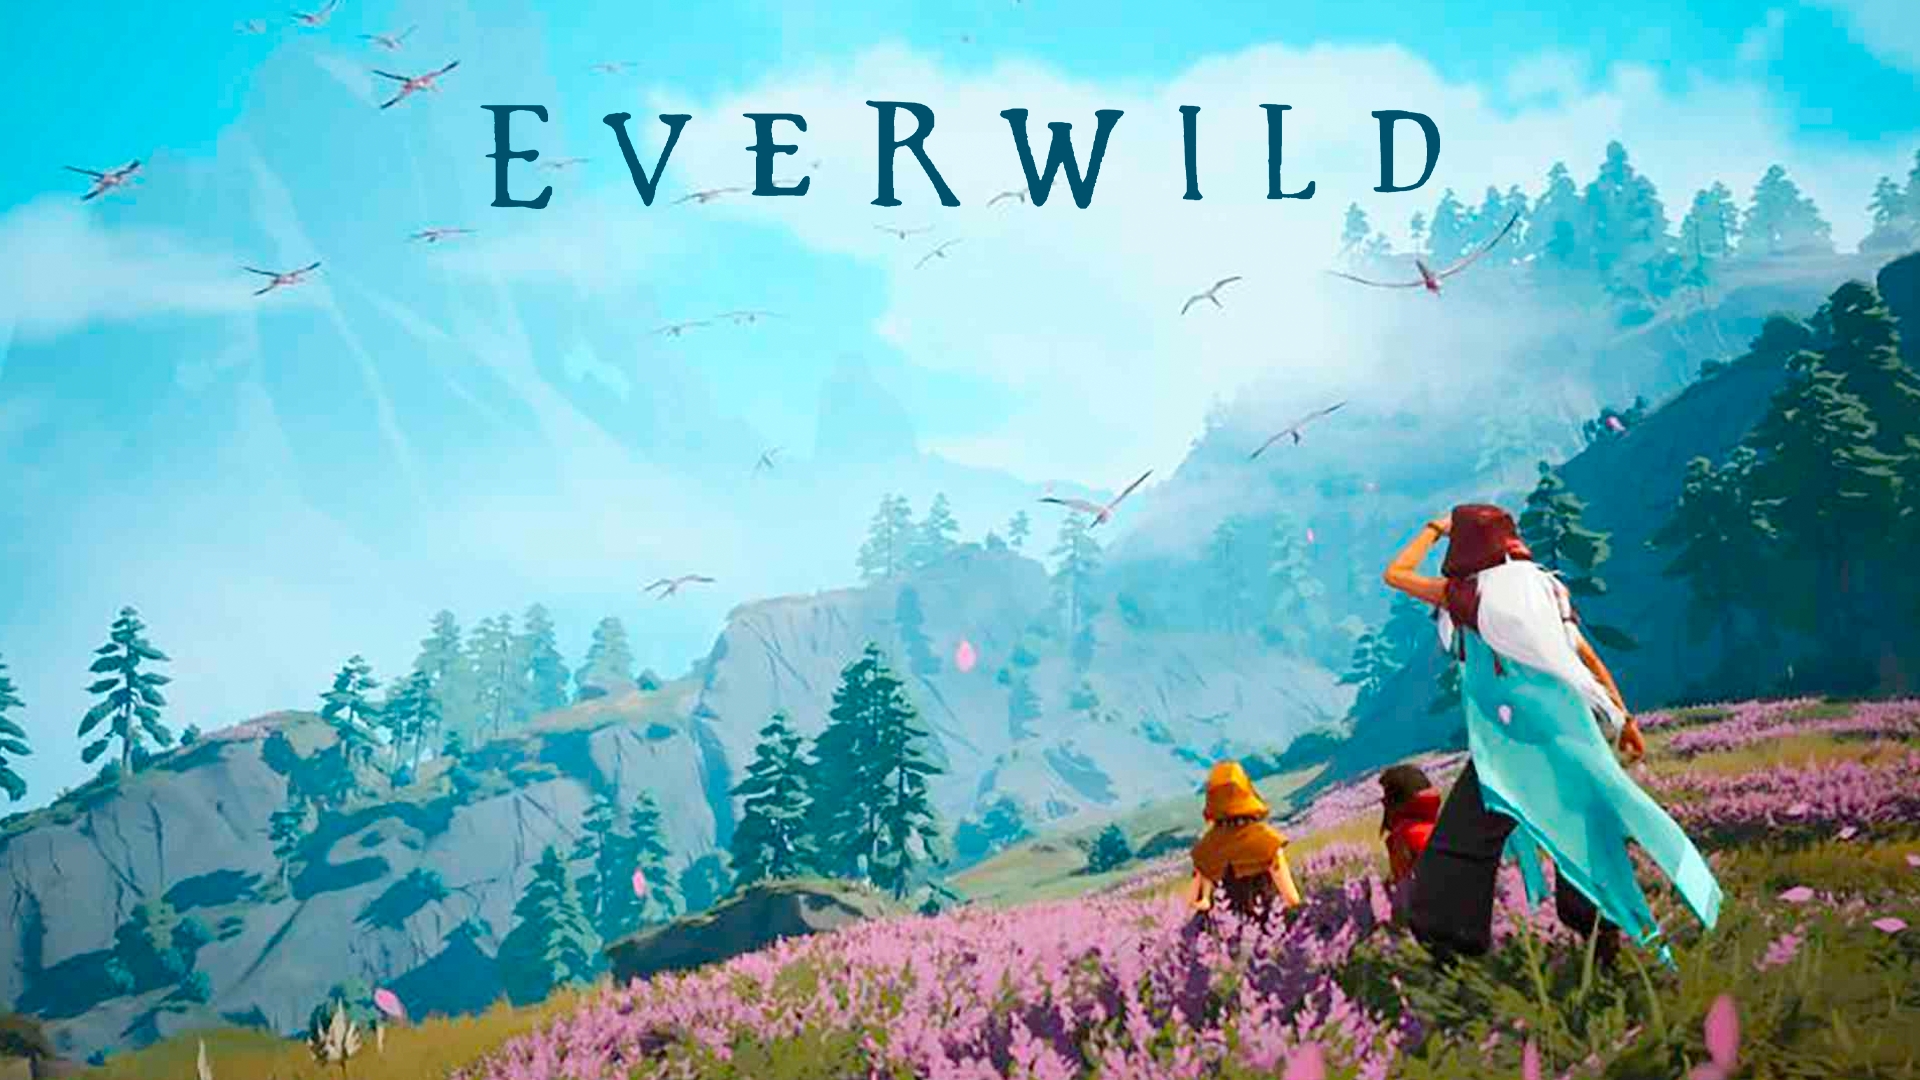 everwild game release date